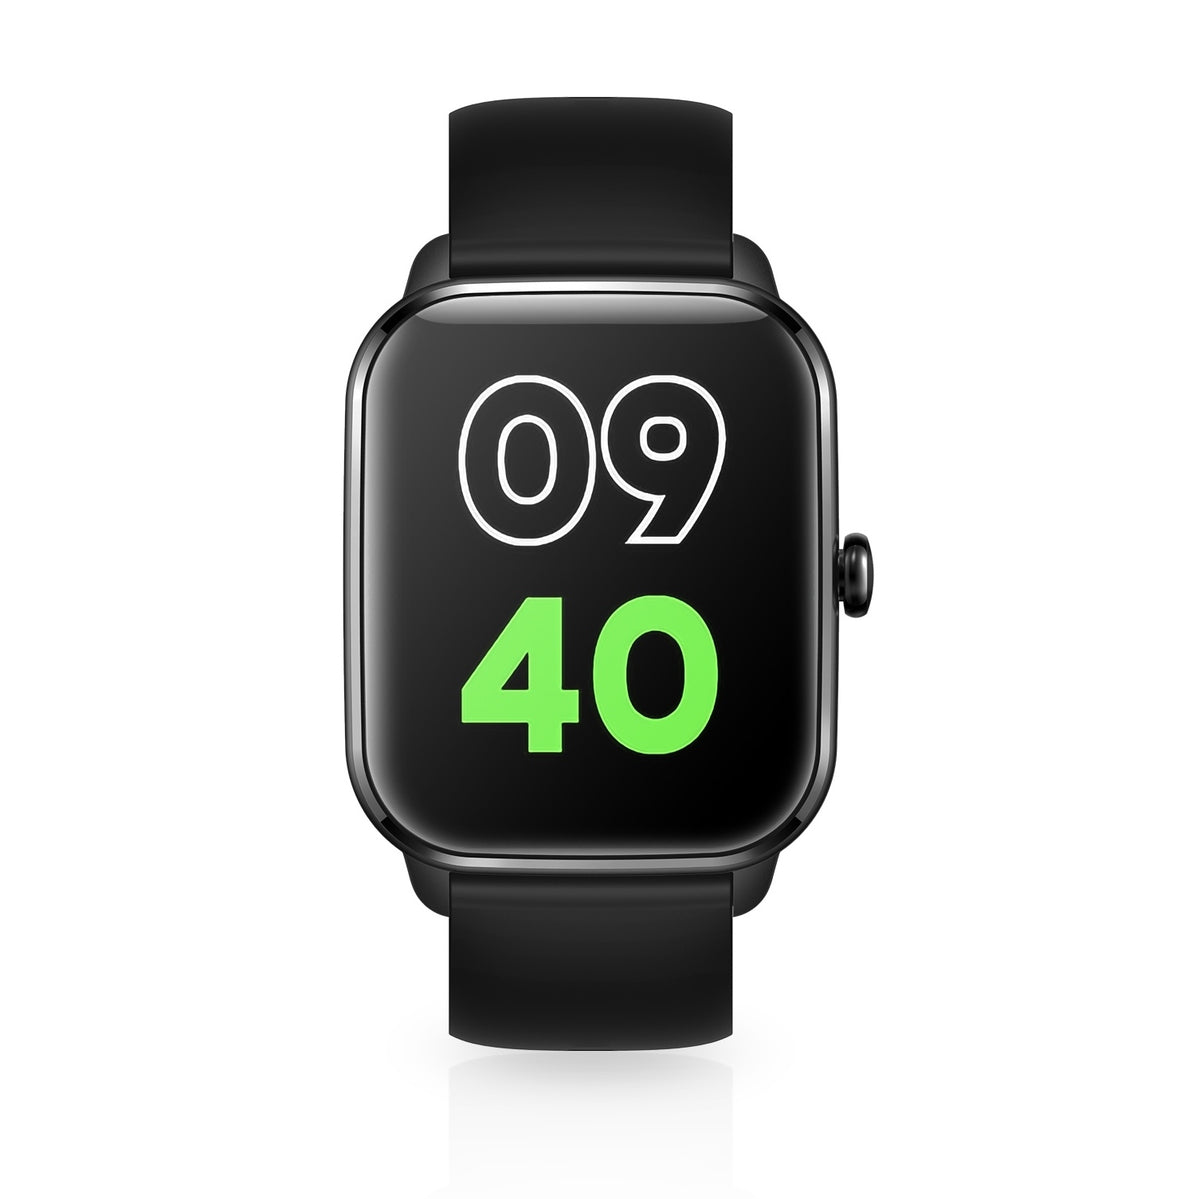 Smart hodinky Niceboy Watch 3, bluetooth, carbon black